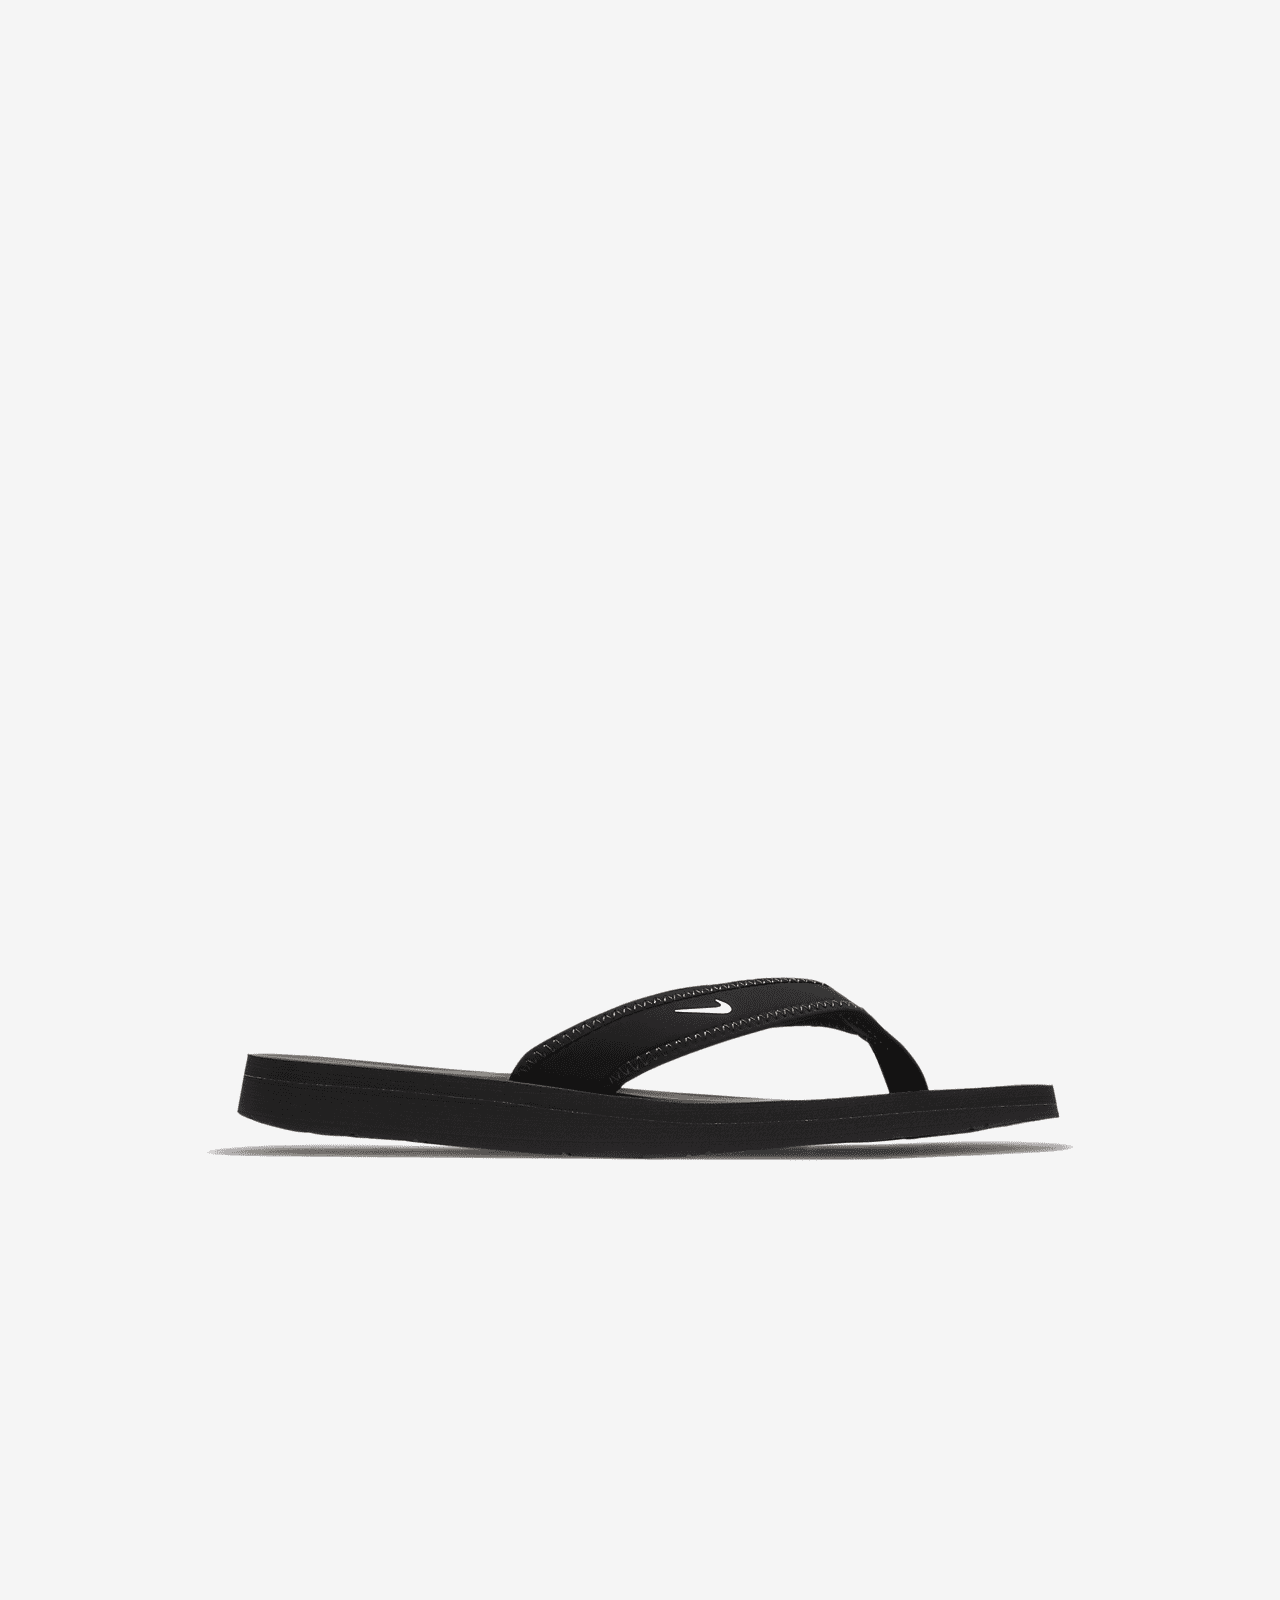 Nike Celso 314870-011 Thong Flip Flop Sandals Women's Size 7 Black